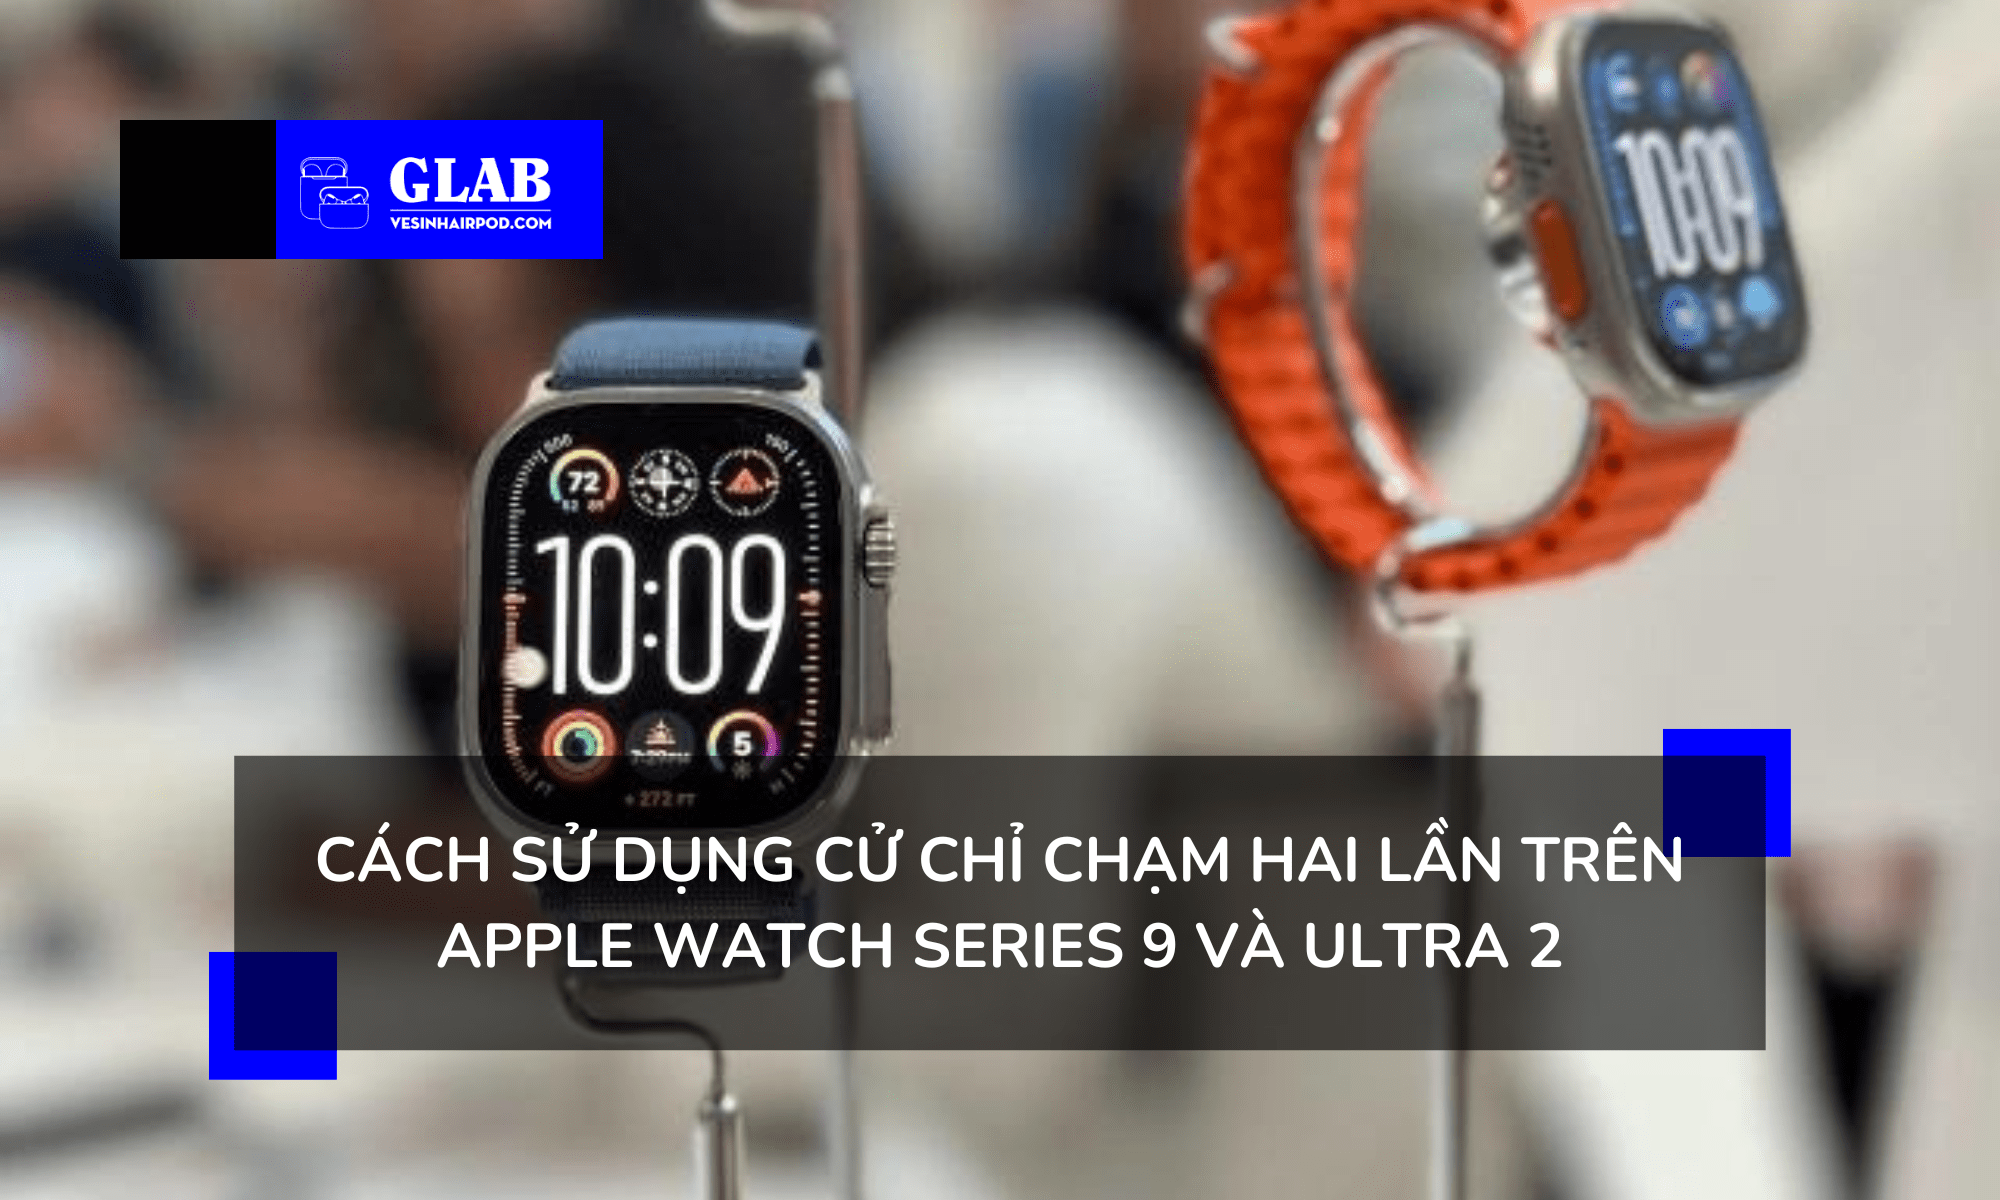 apple-watch-series-9-va-ultra-2